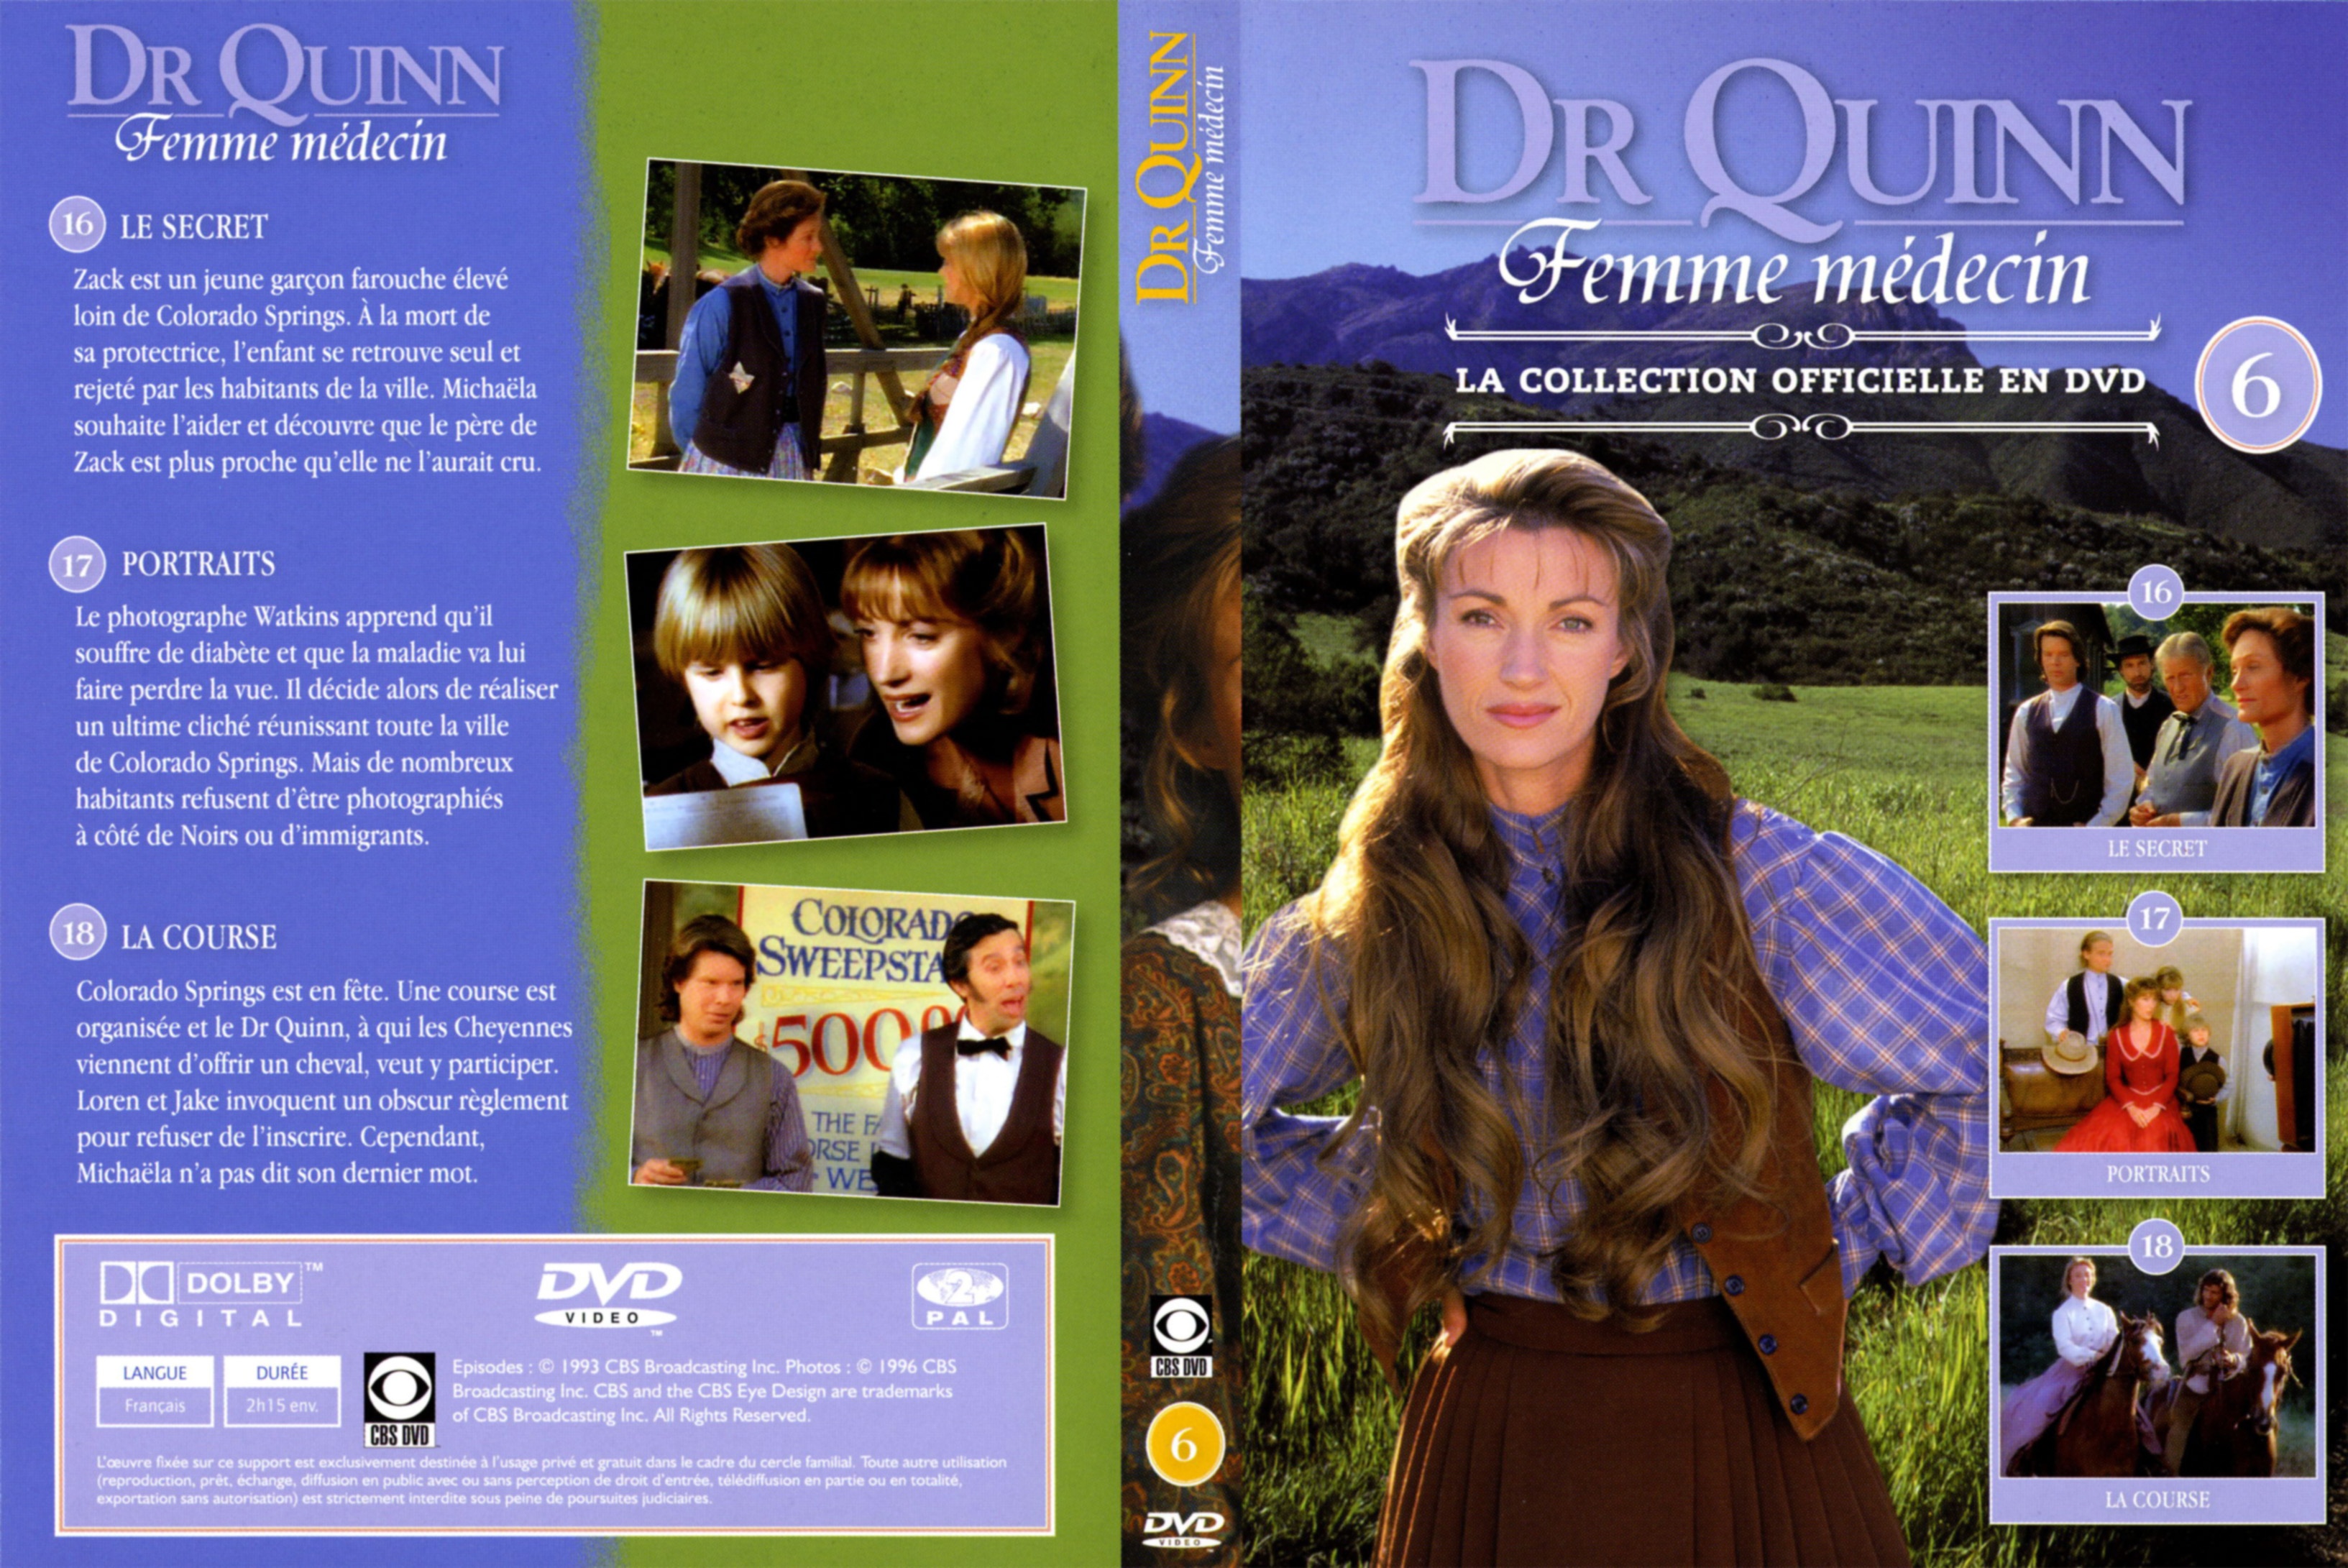 Jaquette DVD Dr Quinn femme medecin vol 6